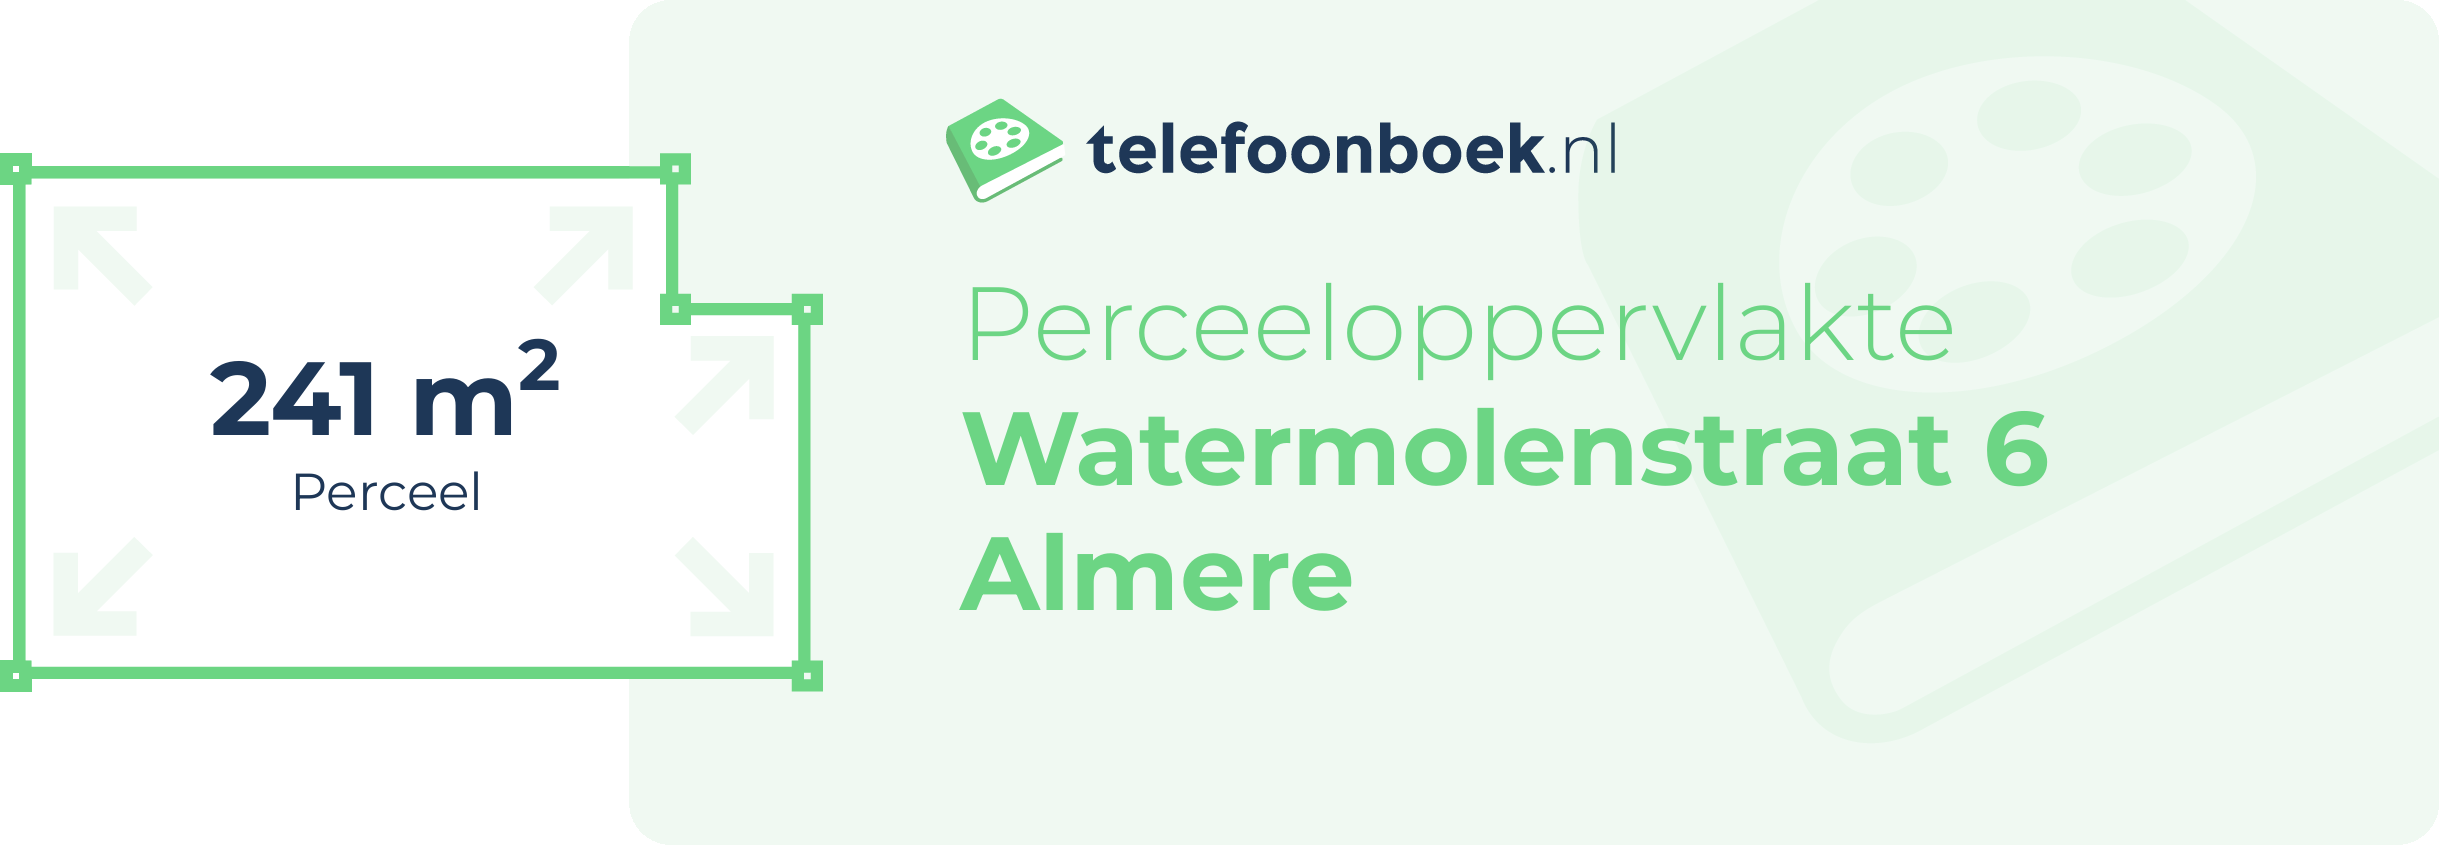 Perceeloppervlakte Watermolenstraat 6 Almere